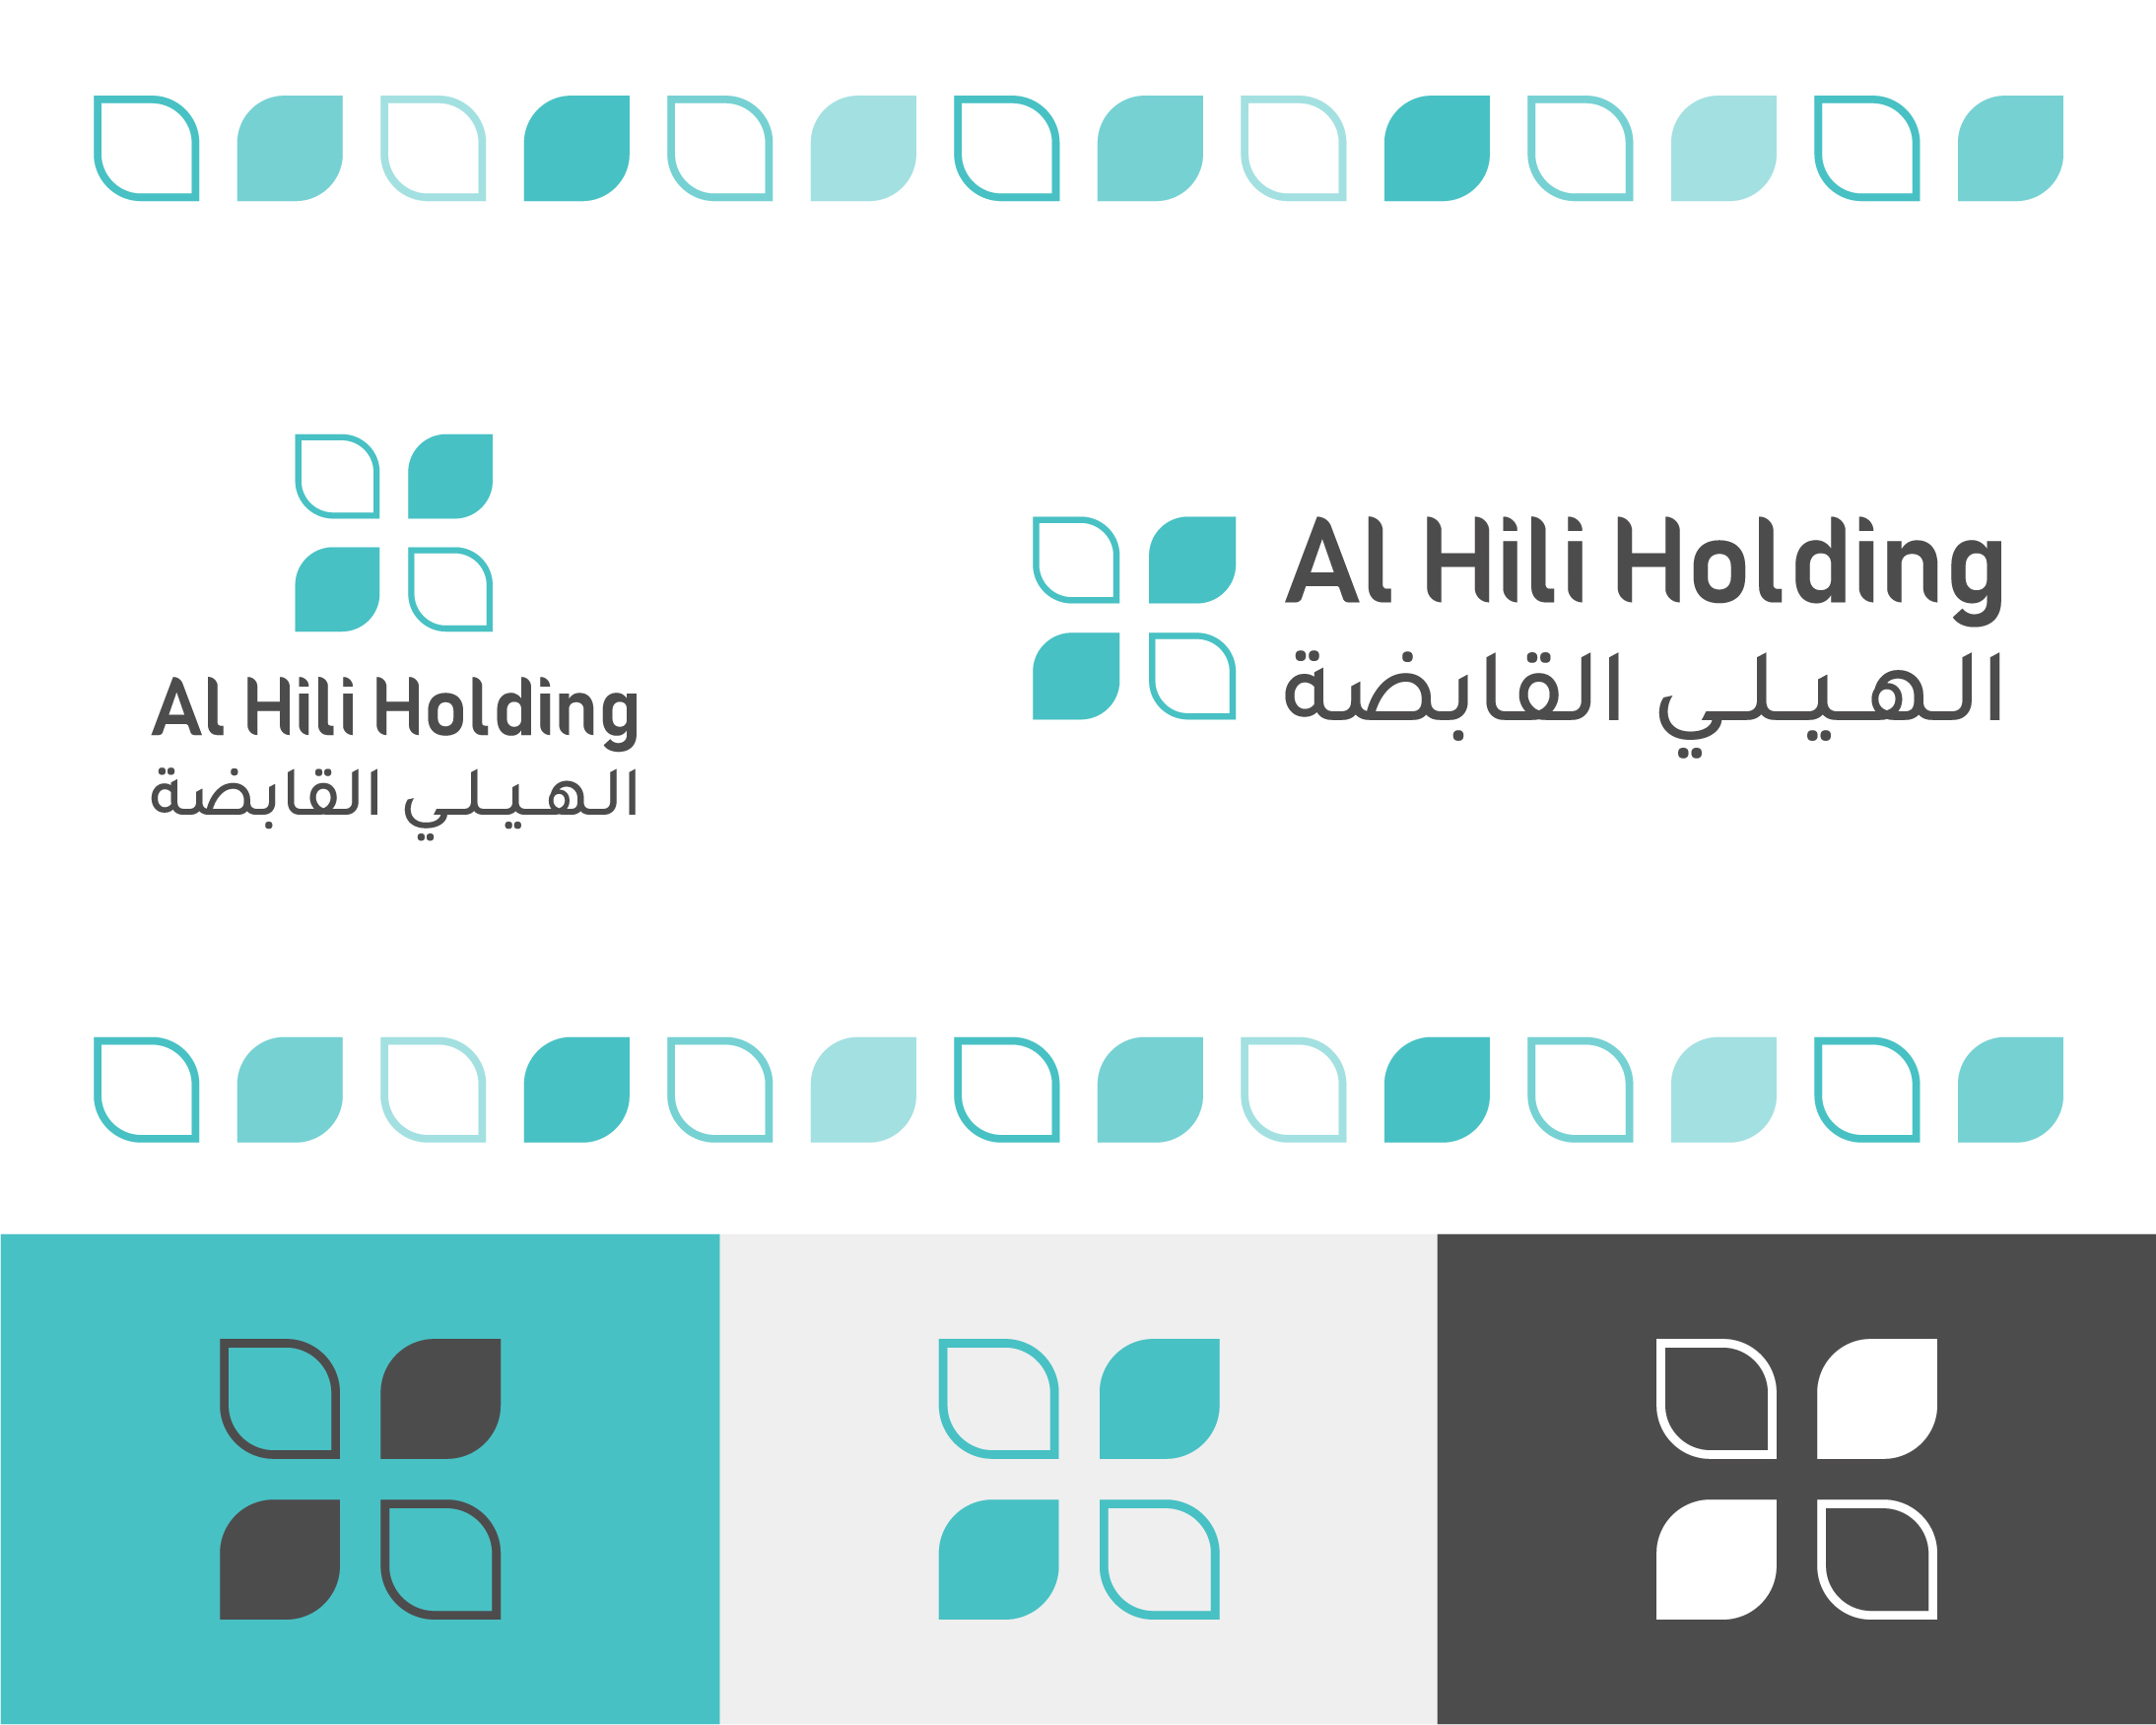 Alhili Holding Company